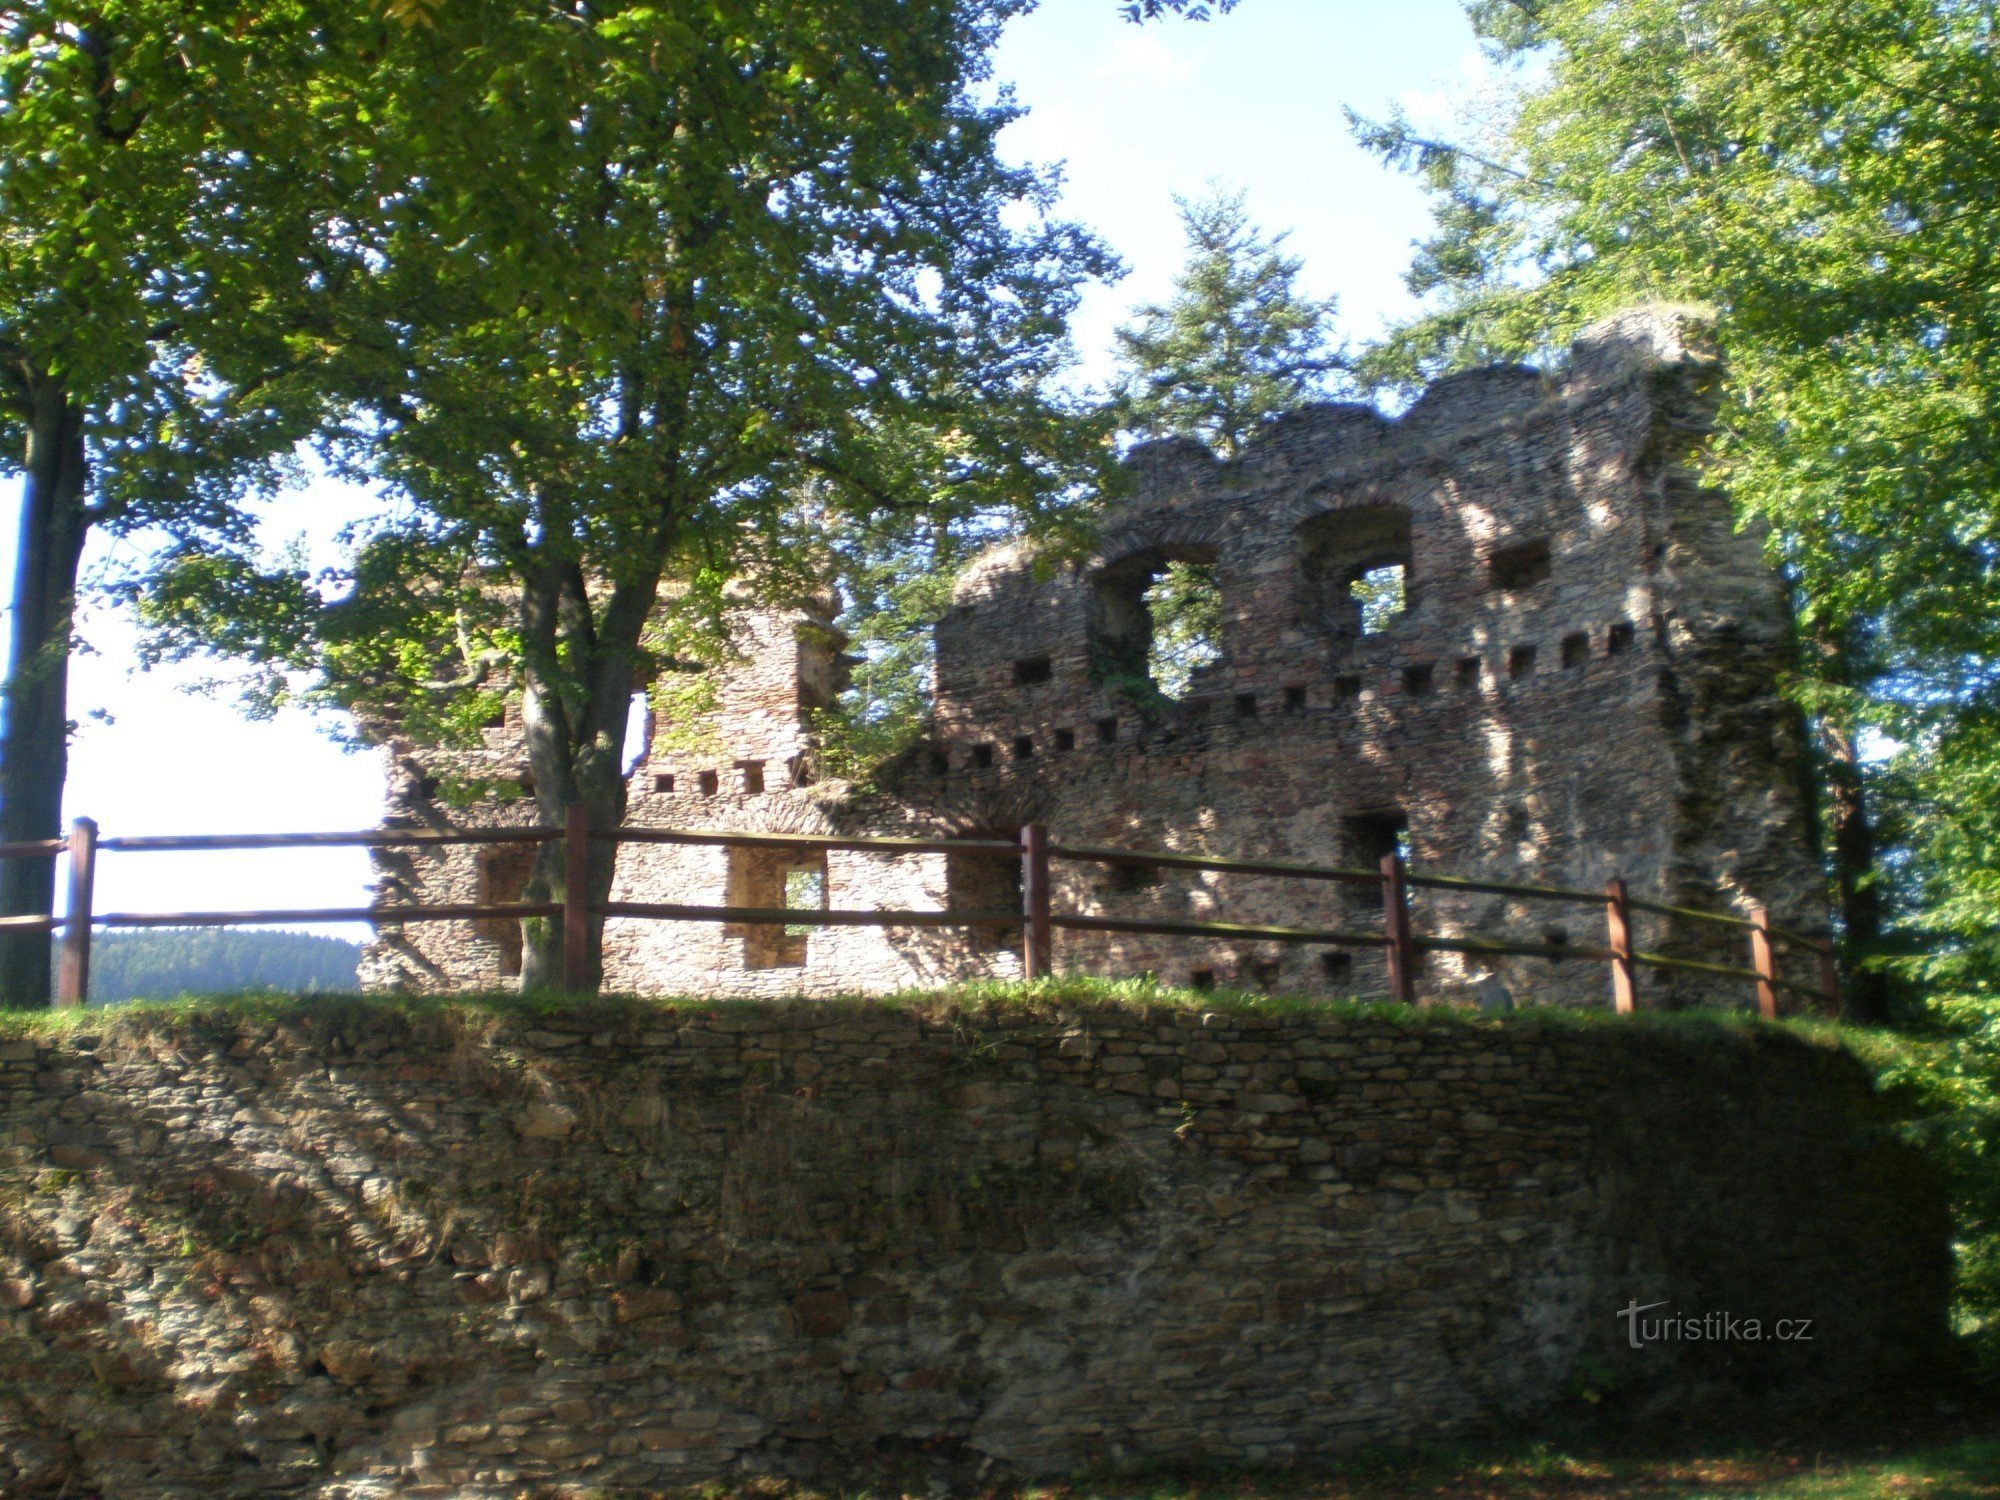 Dalečín ruins